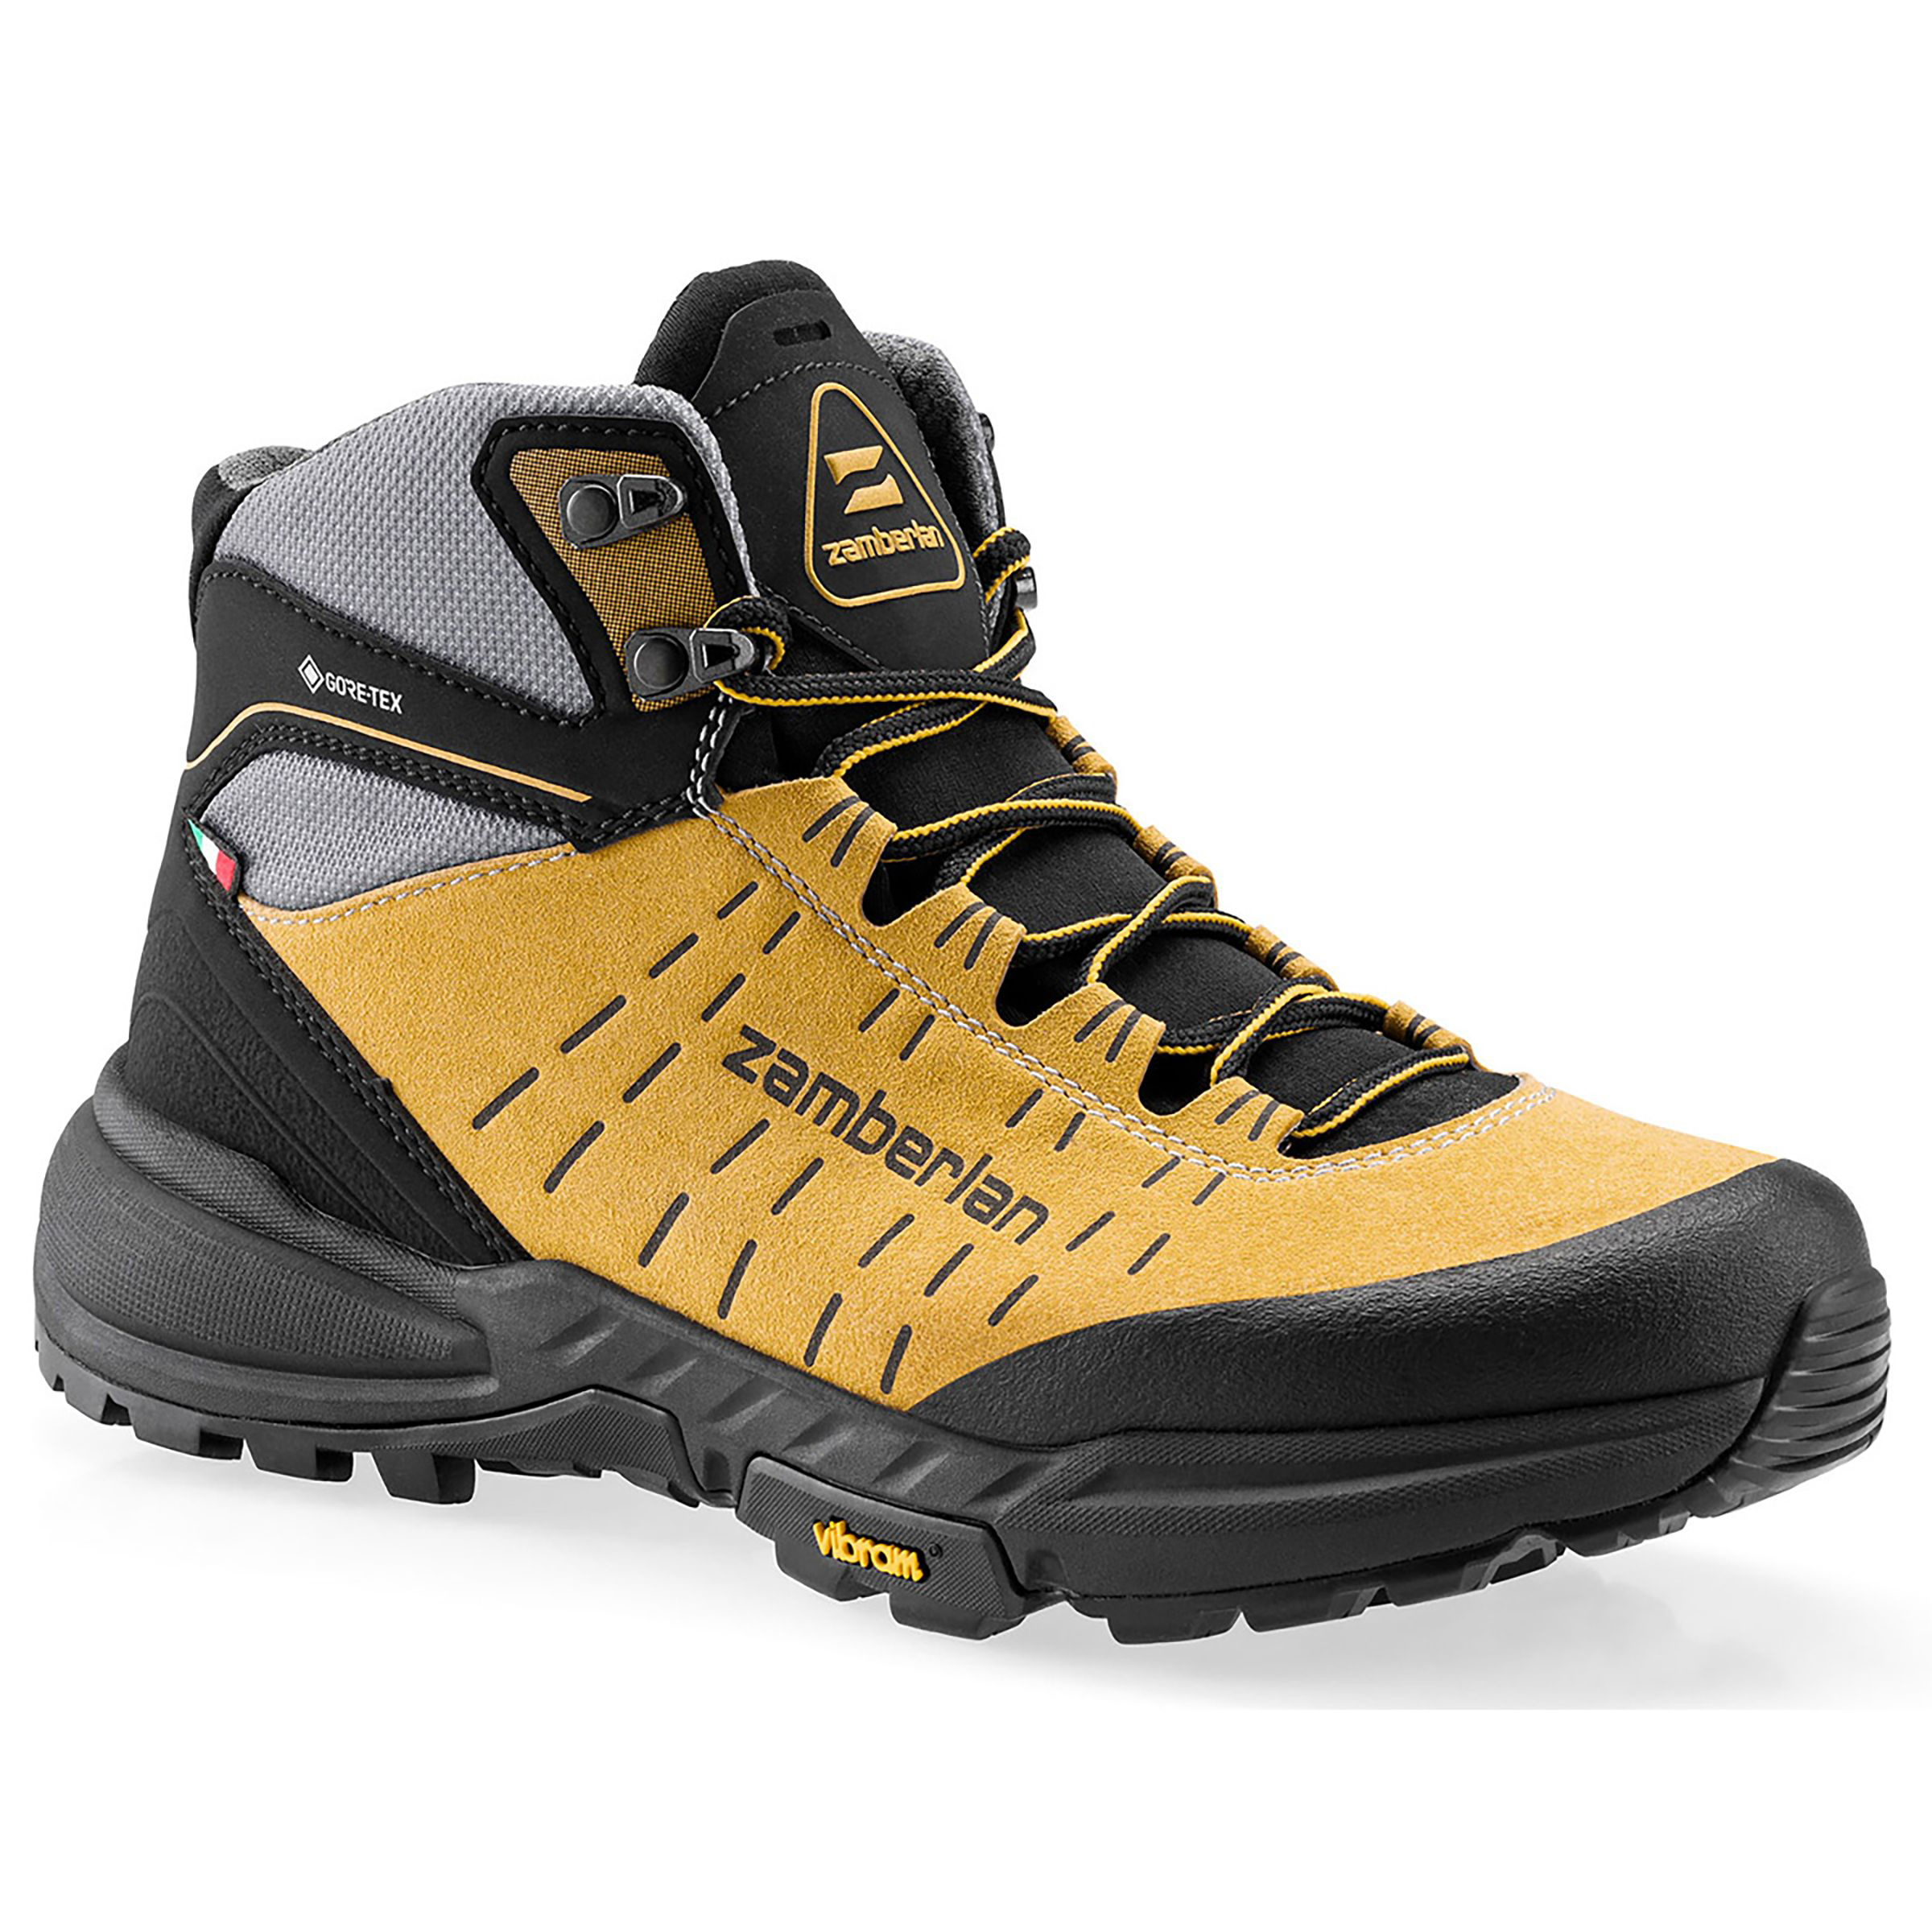 Zamberlan 334 Circe GTX Waterproof Hiking Boots for Ladies - Yellow - 6.5M